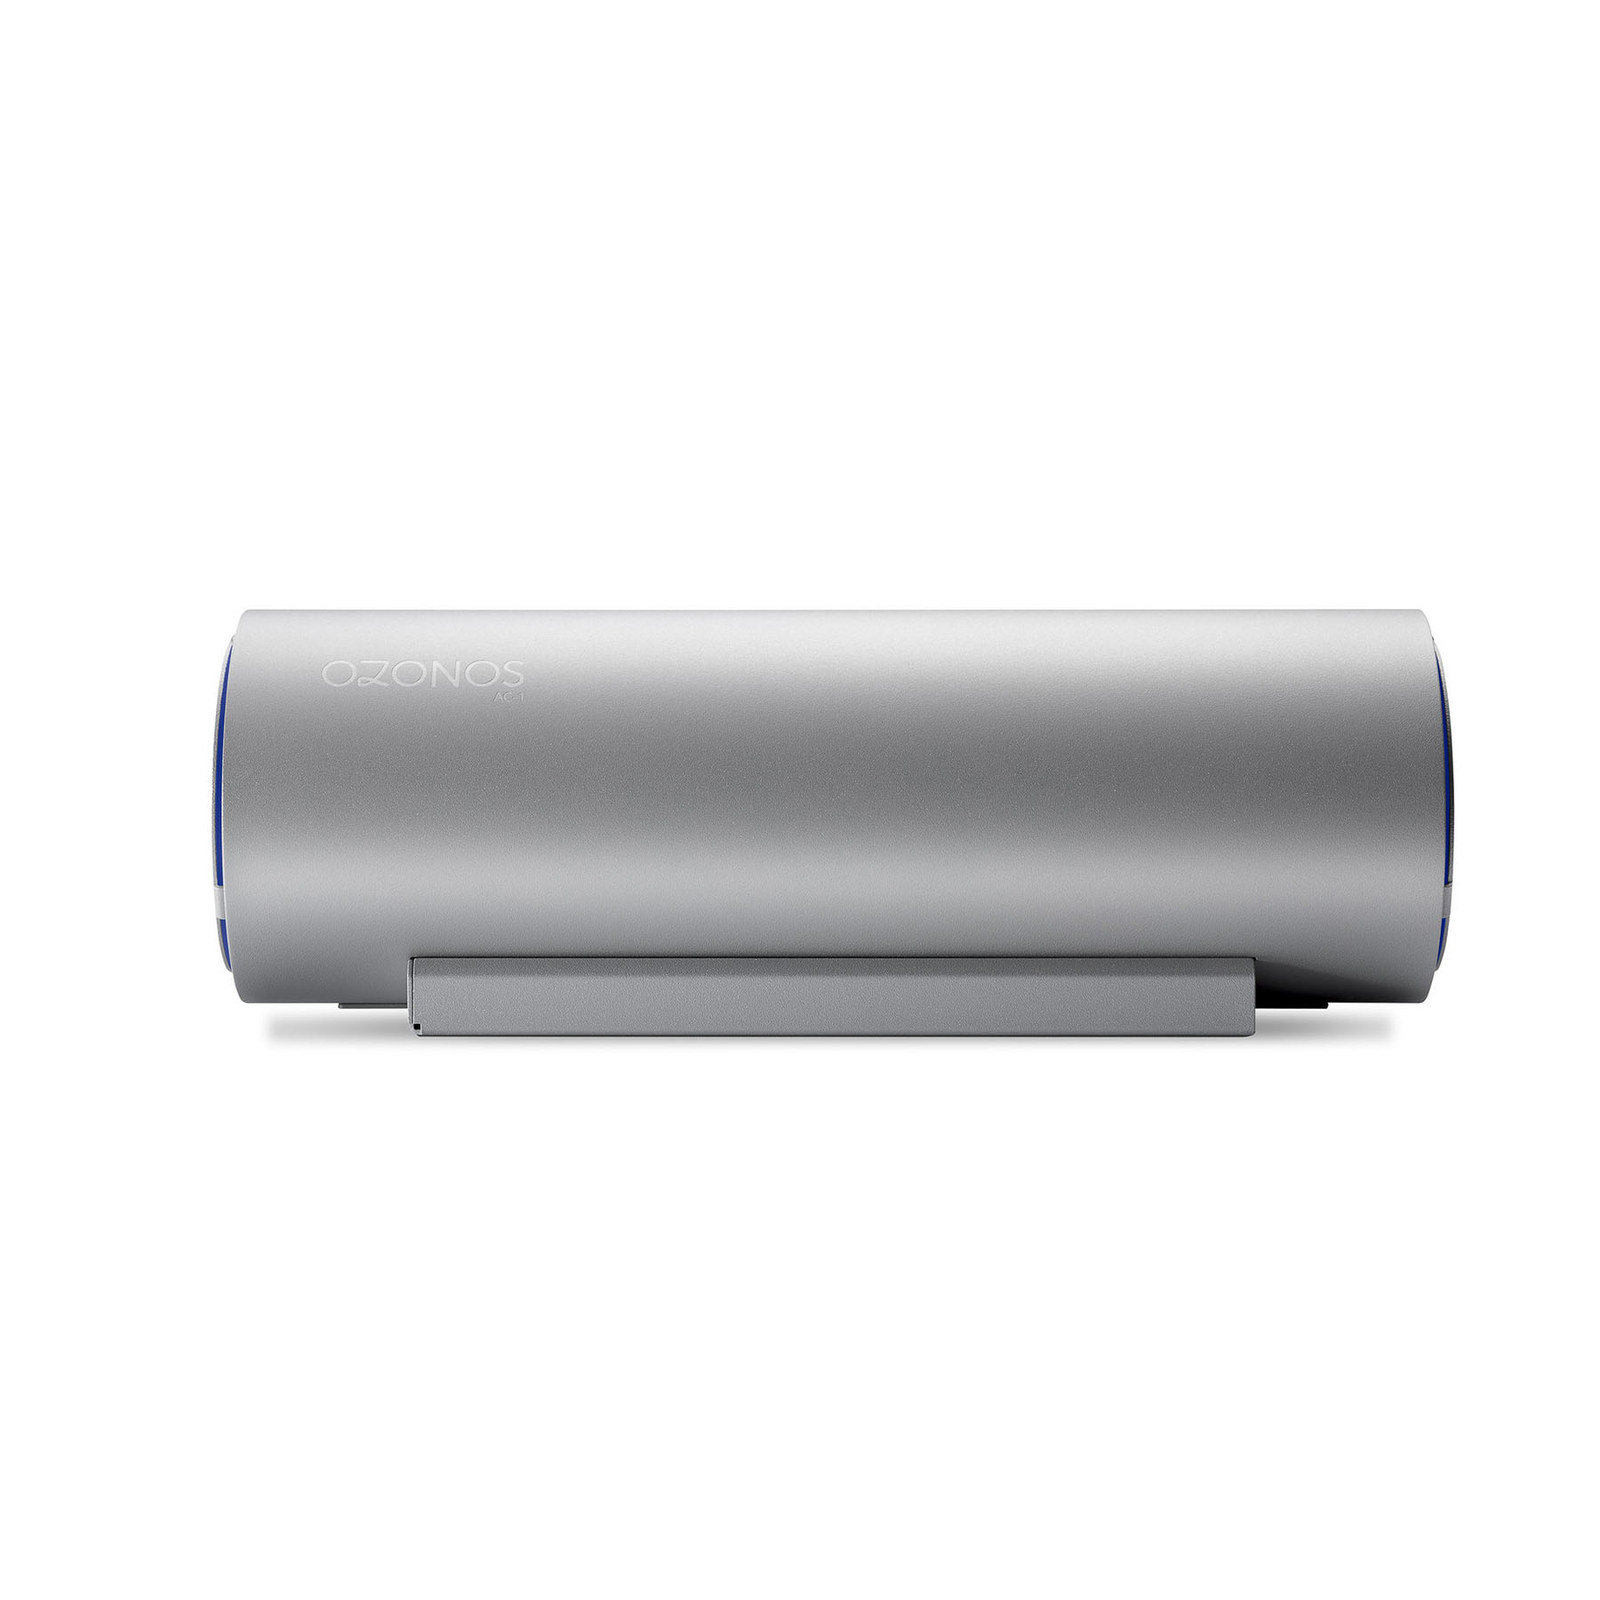 Ozonos AC-1 Pro air purifier, 0.210 ppm O3, silver